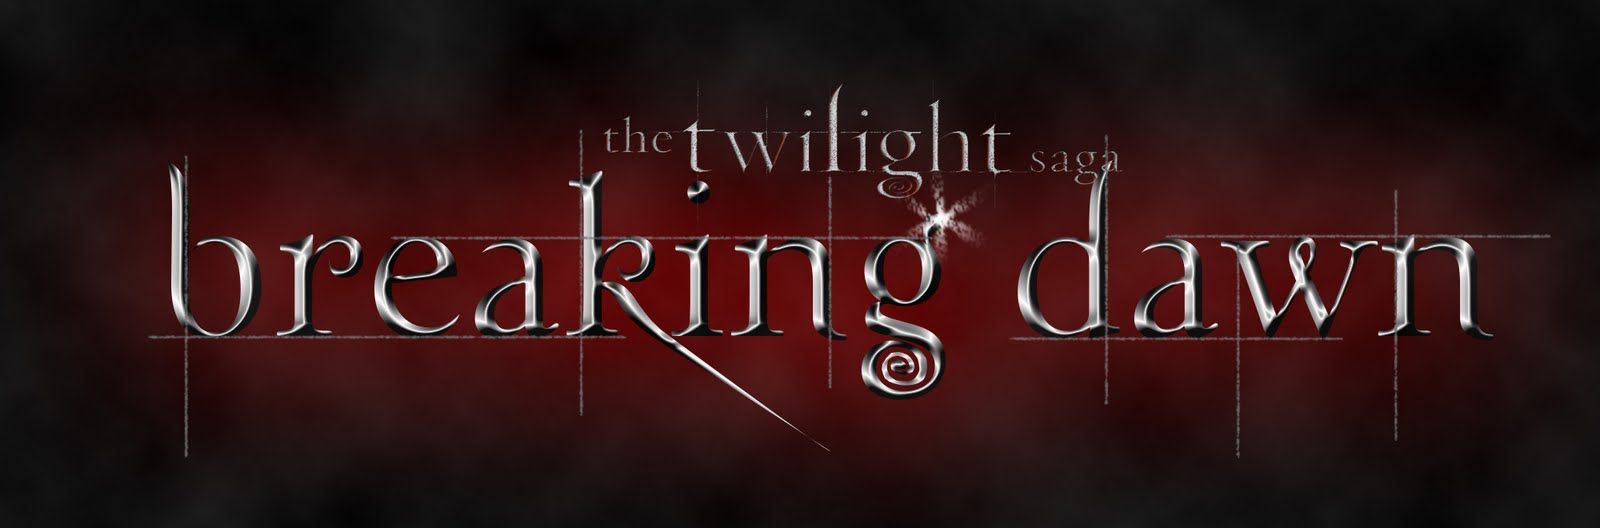 the twilight saga